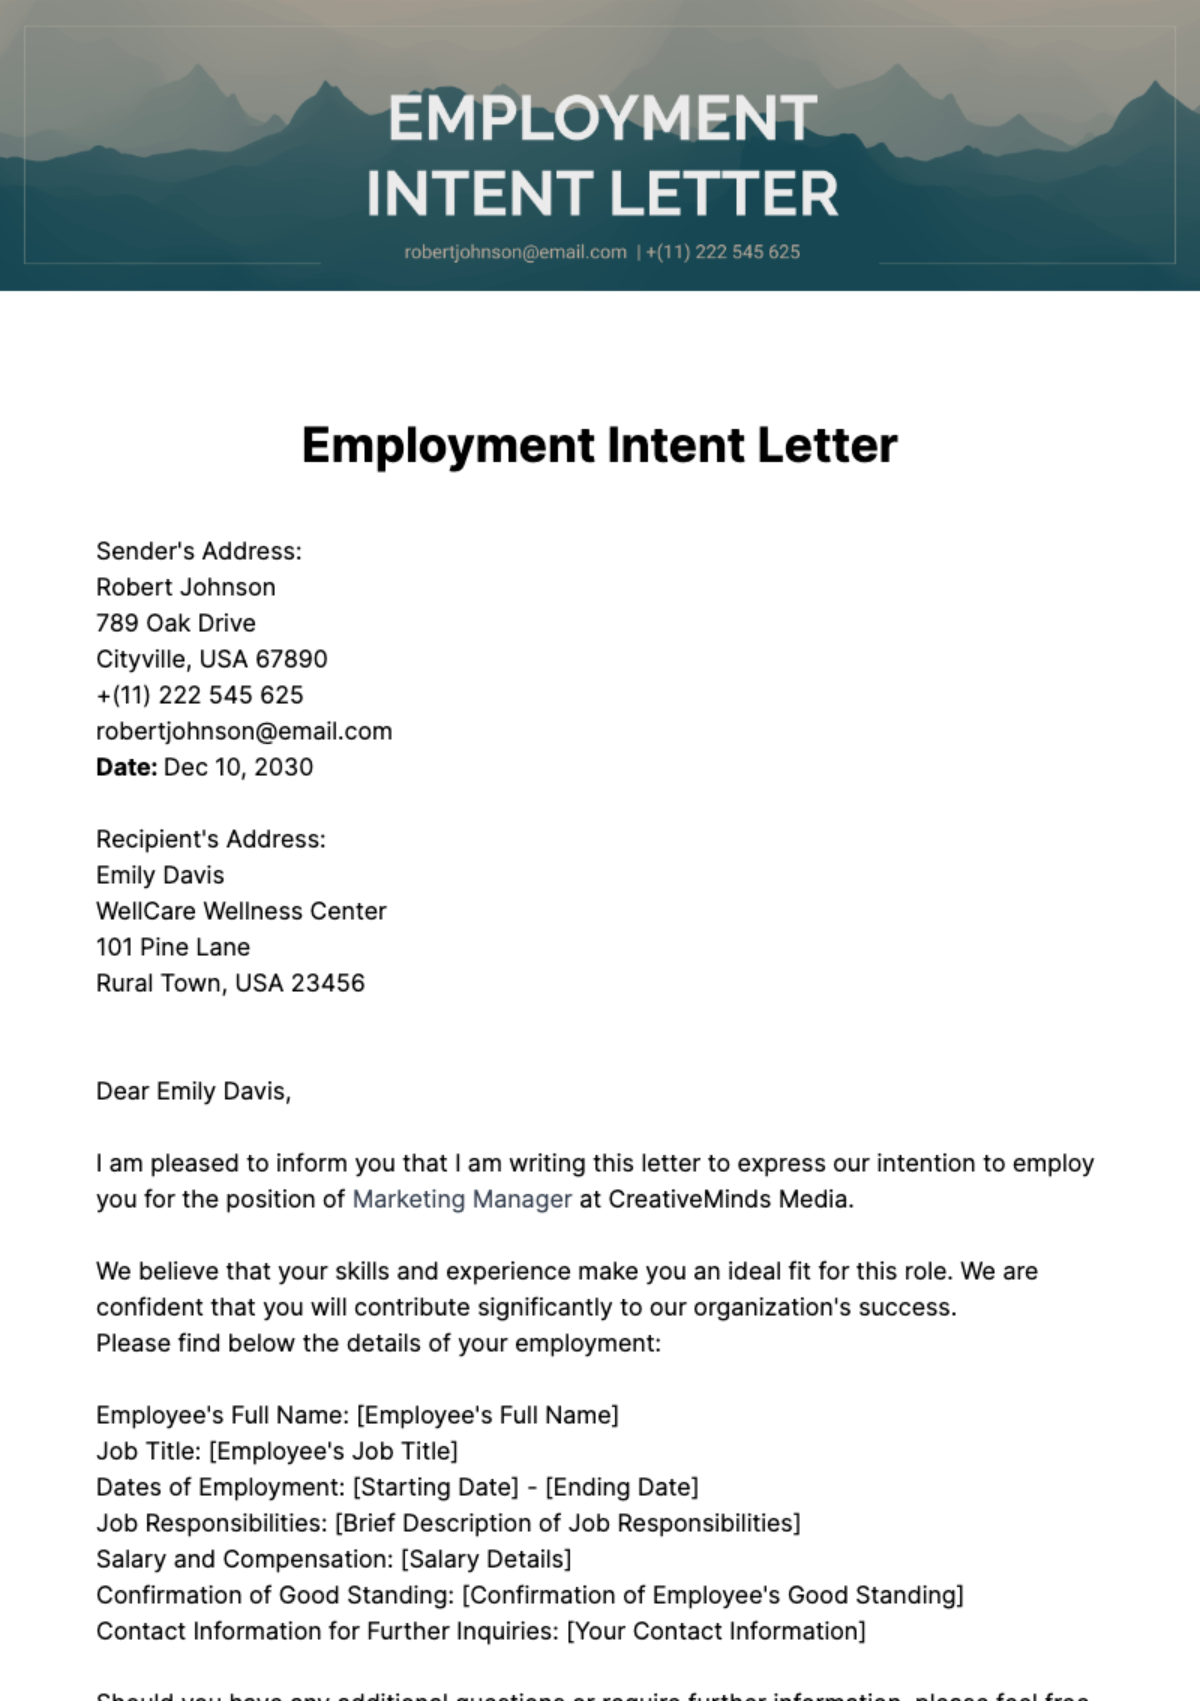 Employment Intent Letter Template